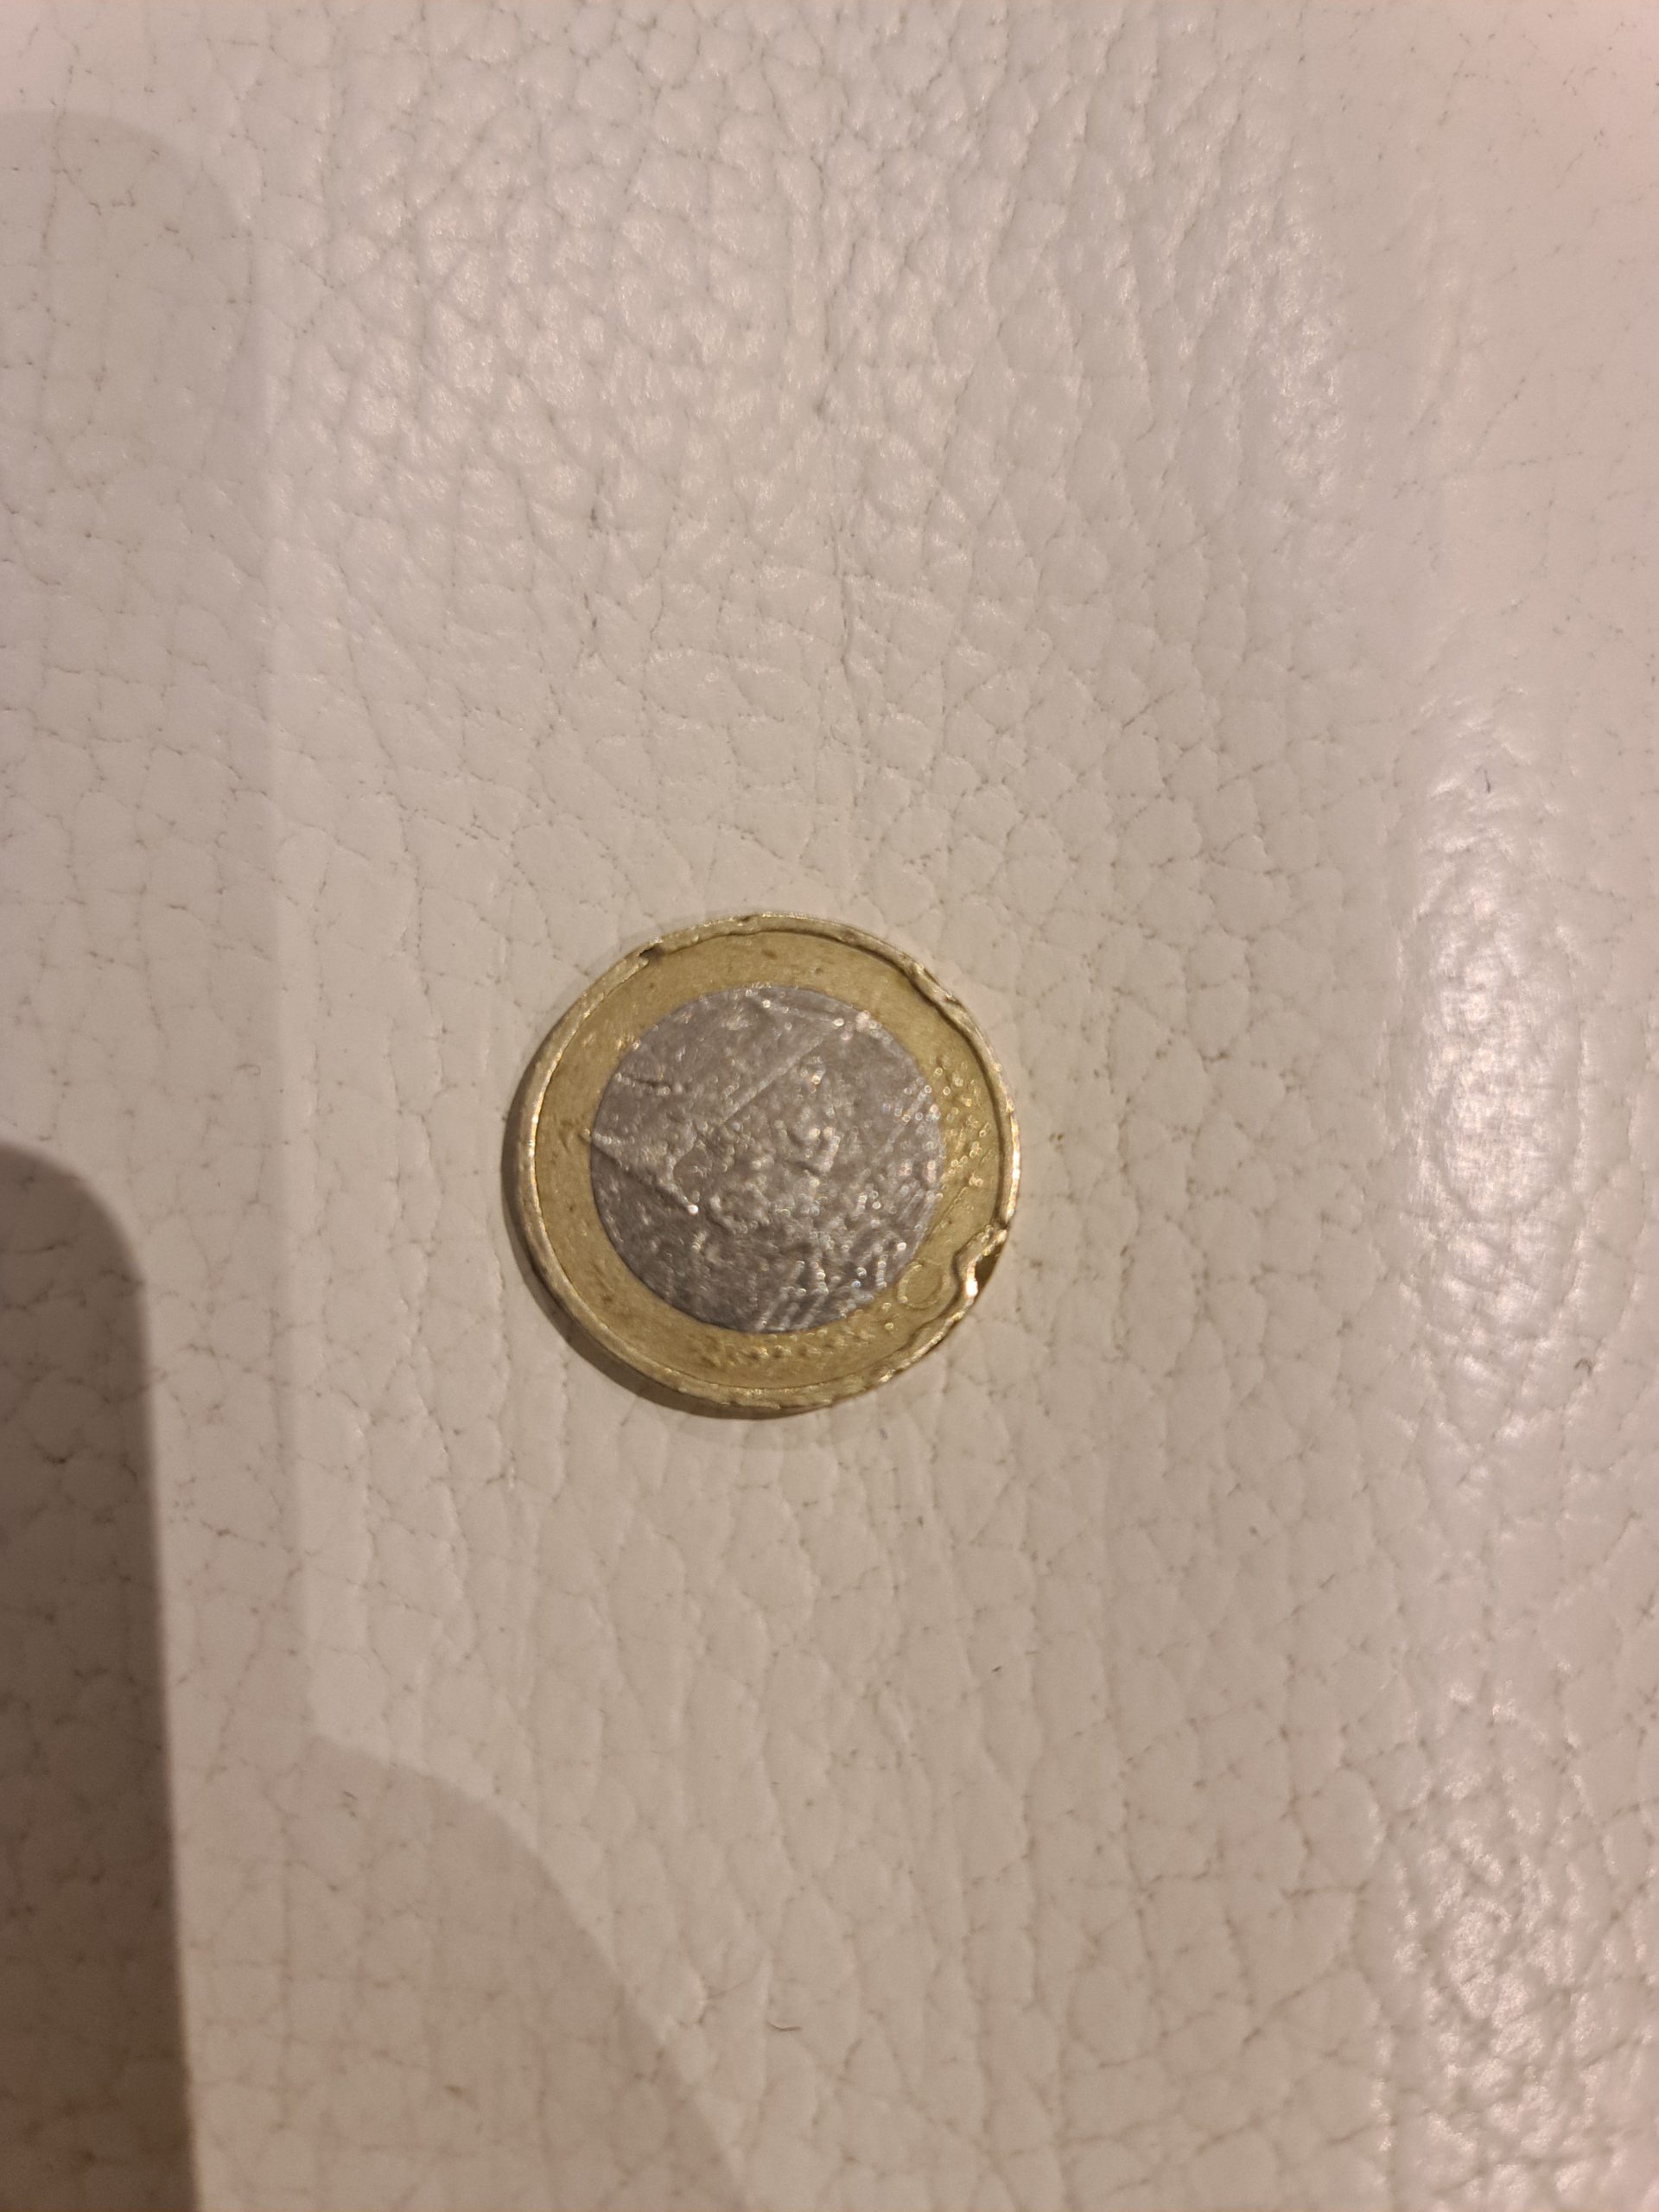 Error Coin: 1€ Fehlprägung